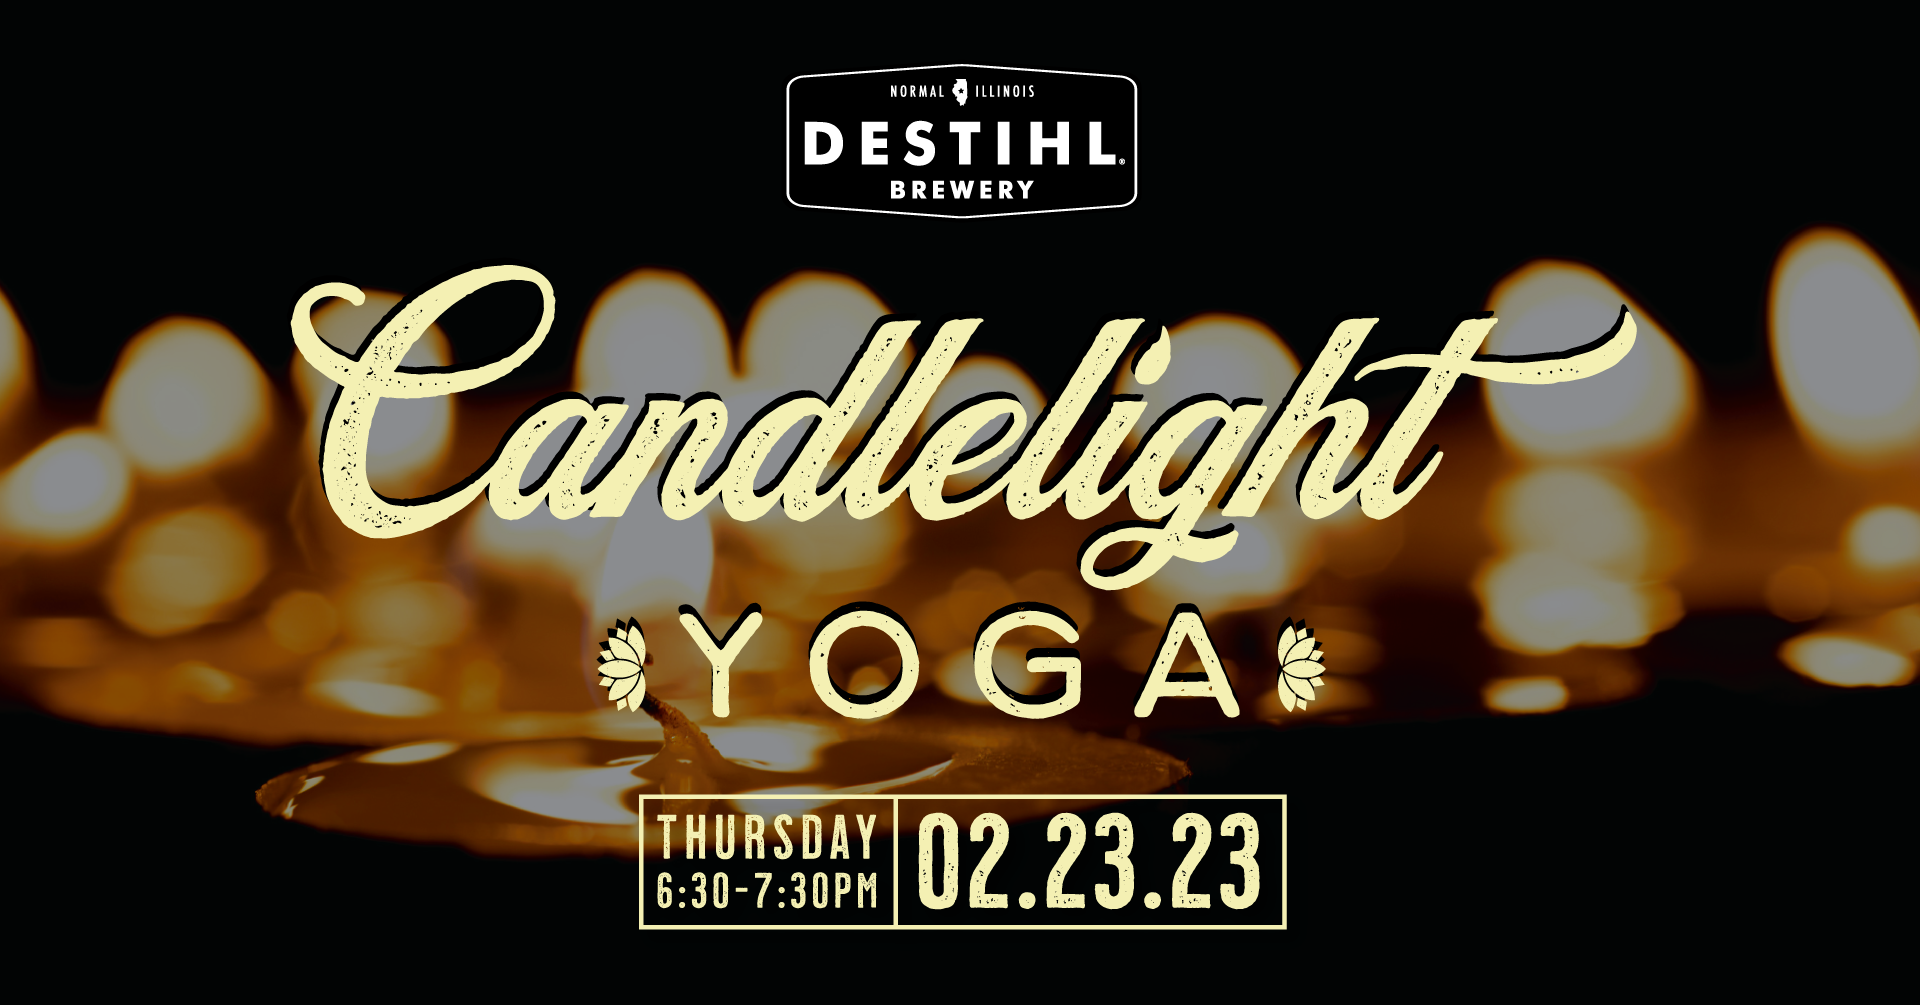 Candlelight Yoga at DESTIHL Brewery